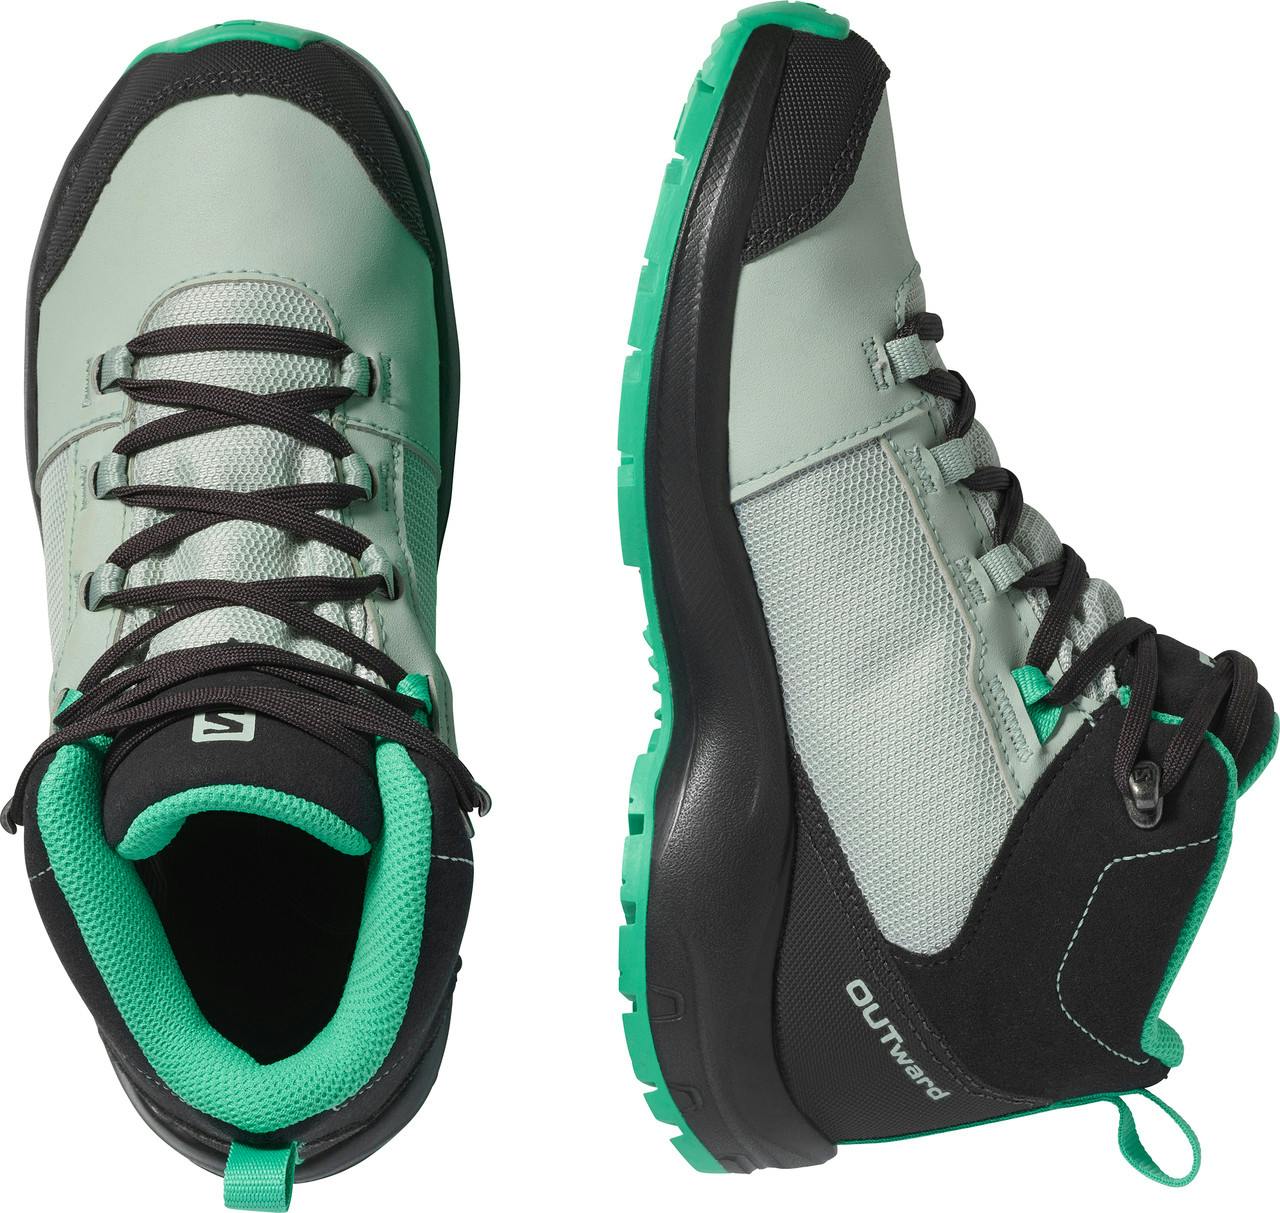 Outward CSWP Hiking Shoes Phantom/Aqua Gray/Mint Le